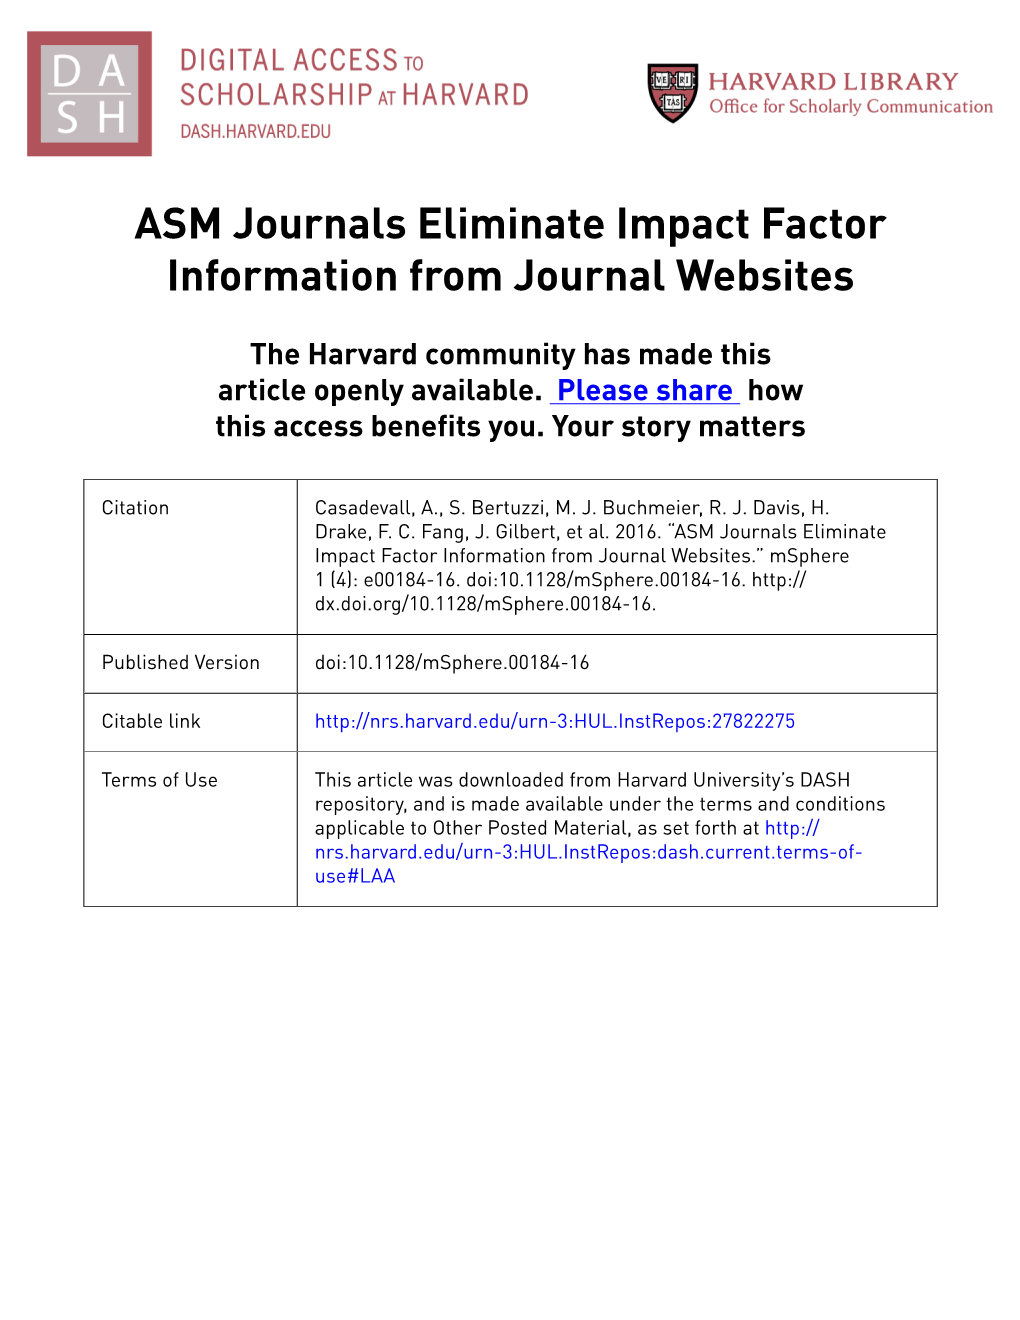 ASM Journals Eliminate Impact Factor Information from Journal Websites